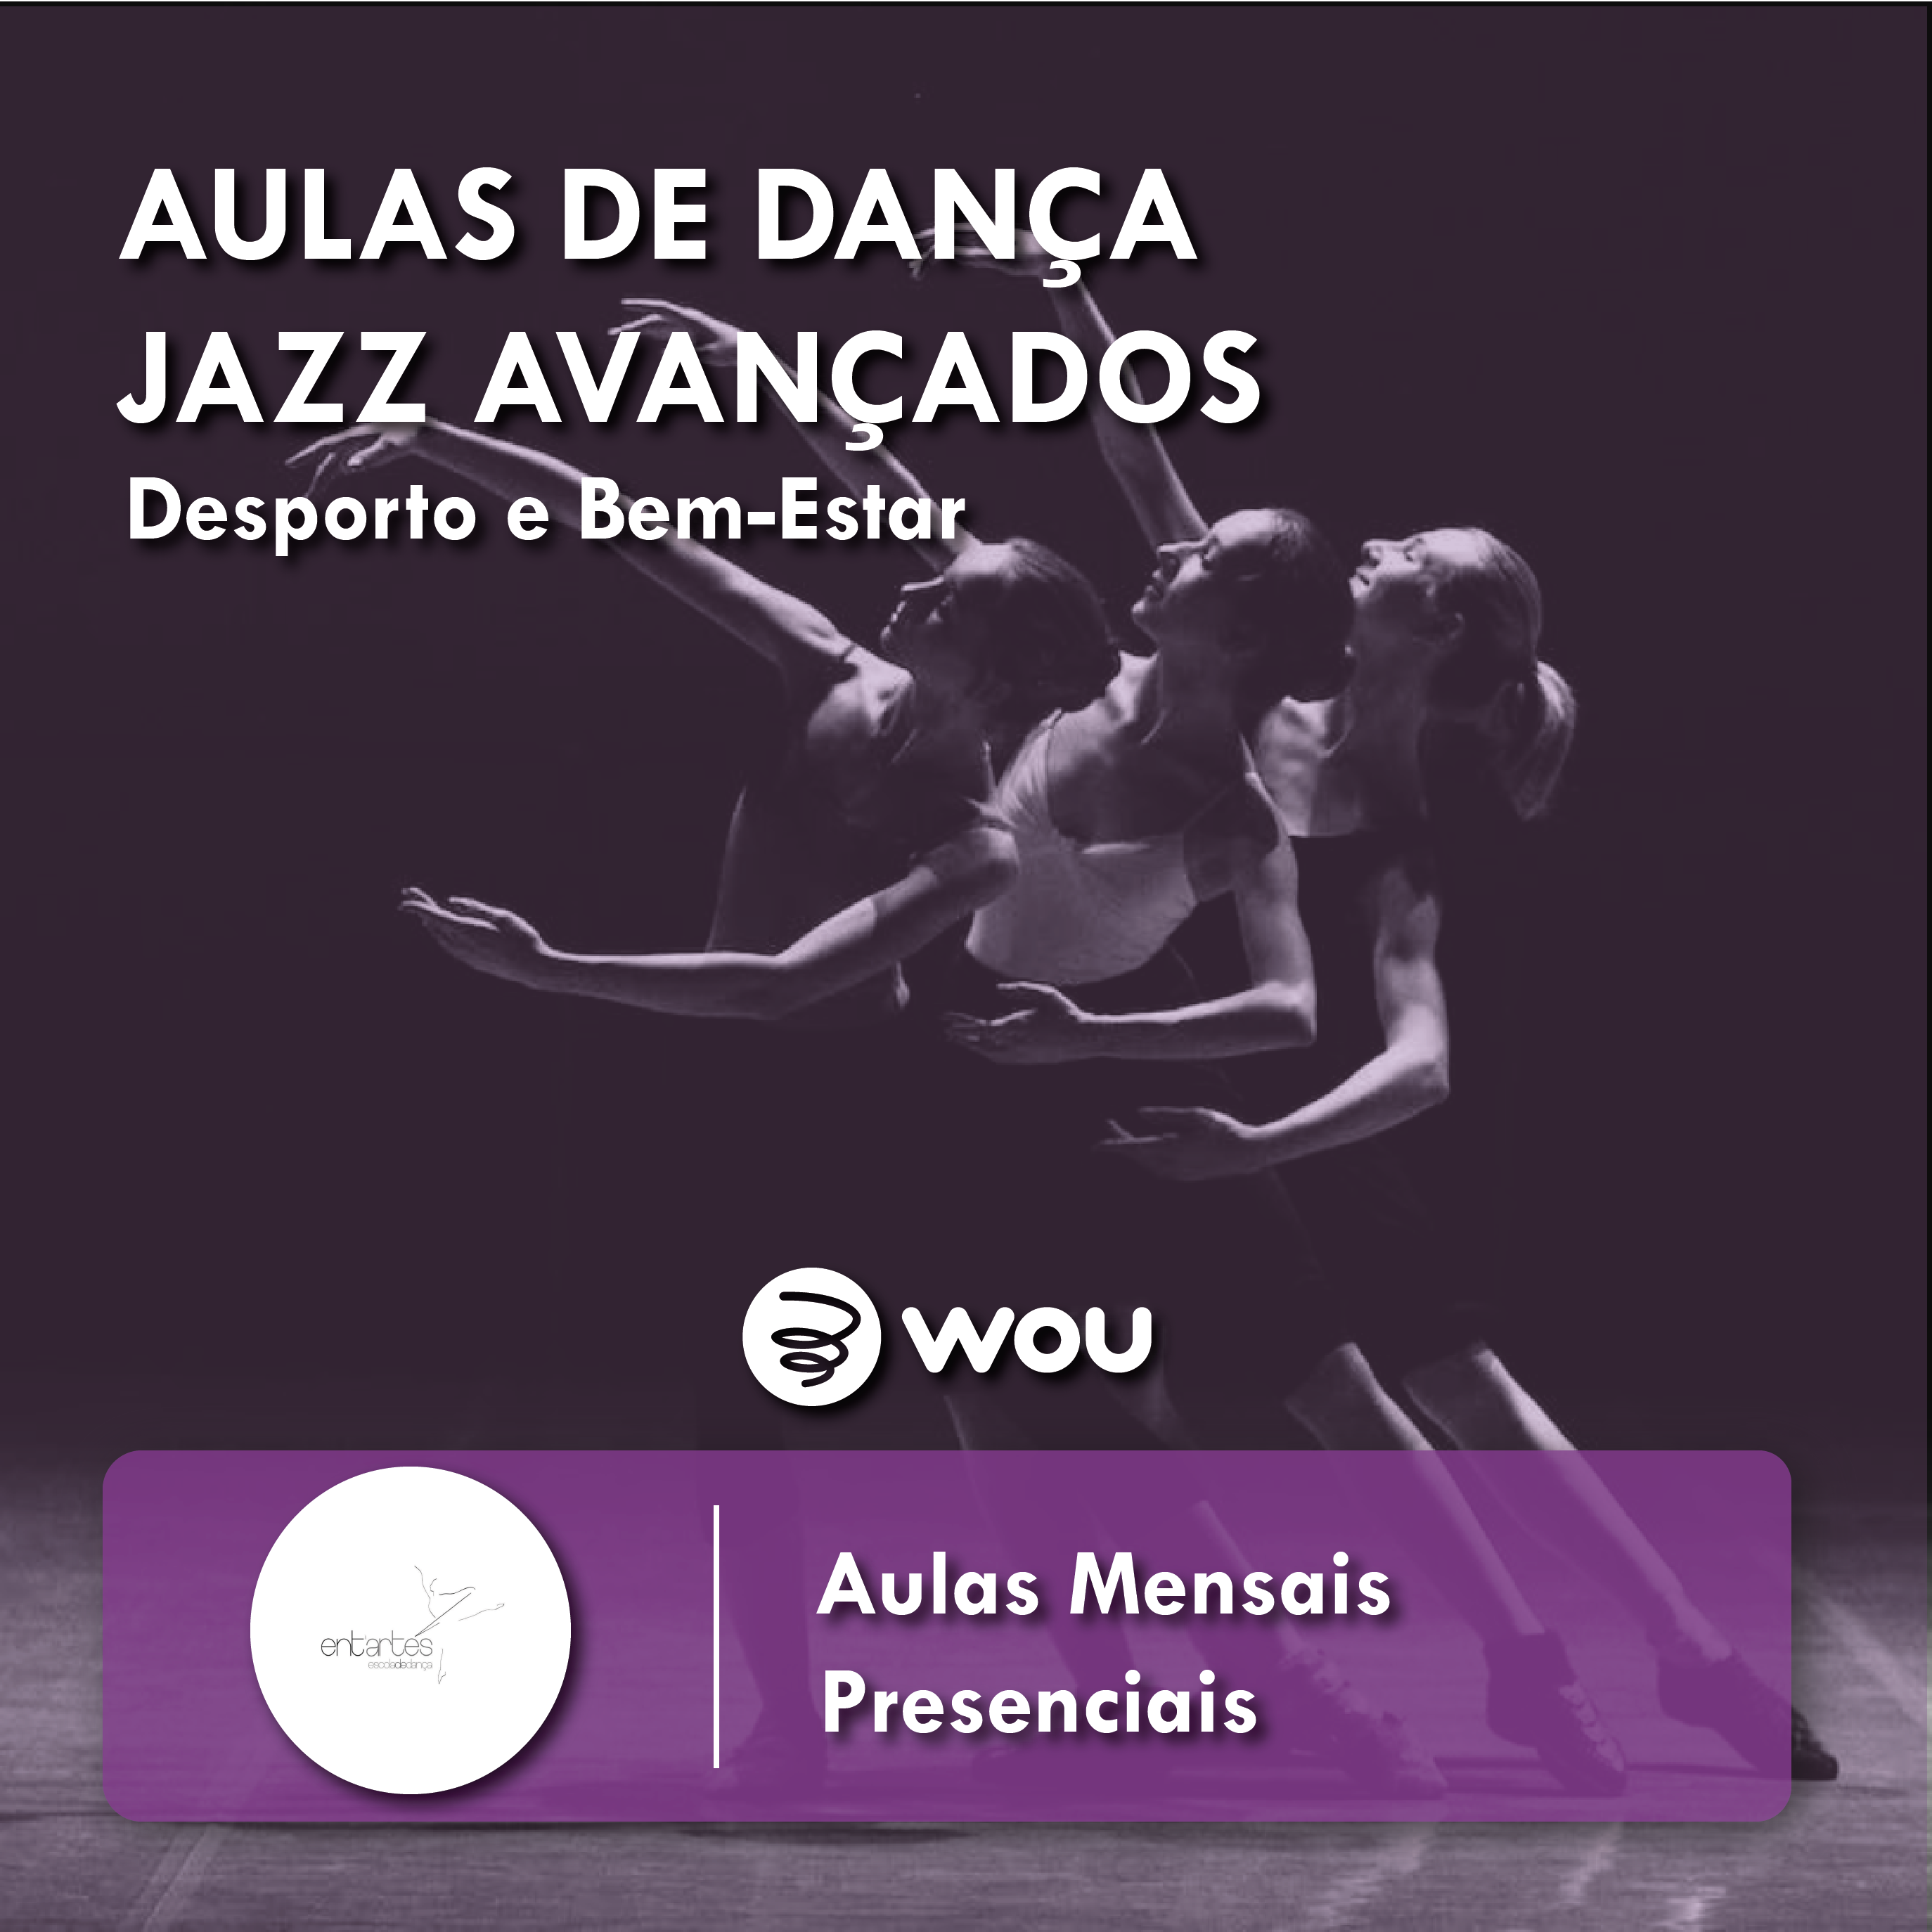 Advanced Jazz Dance Classes in Braga